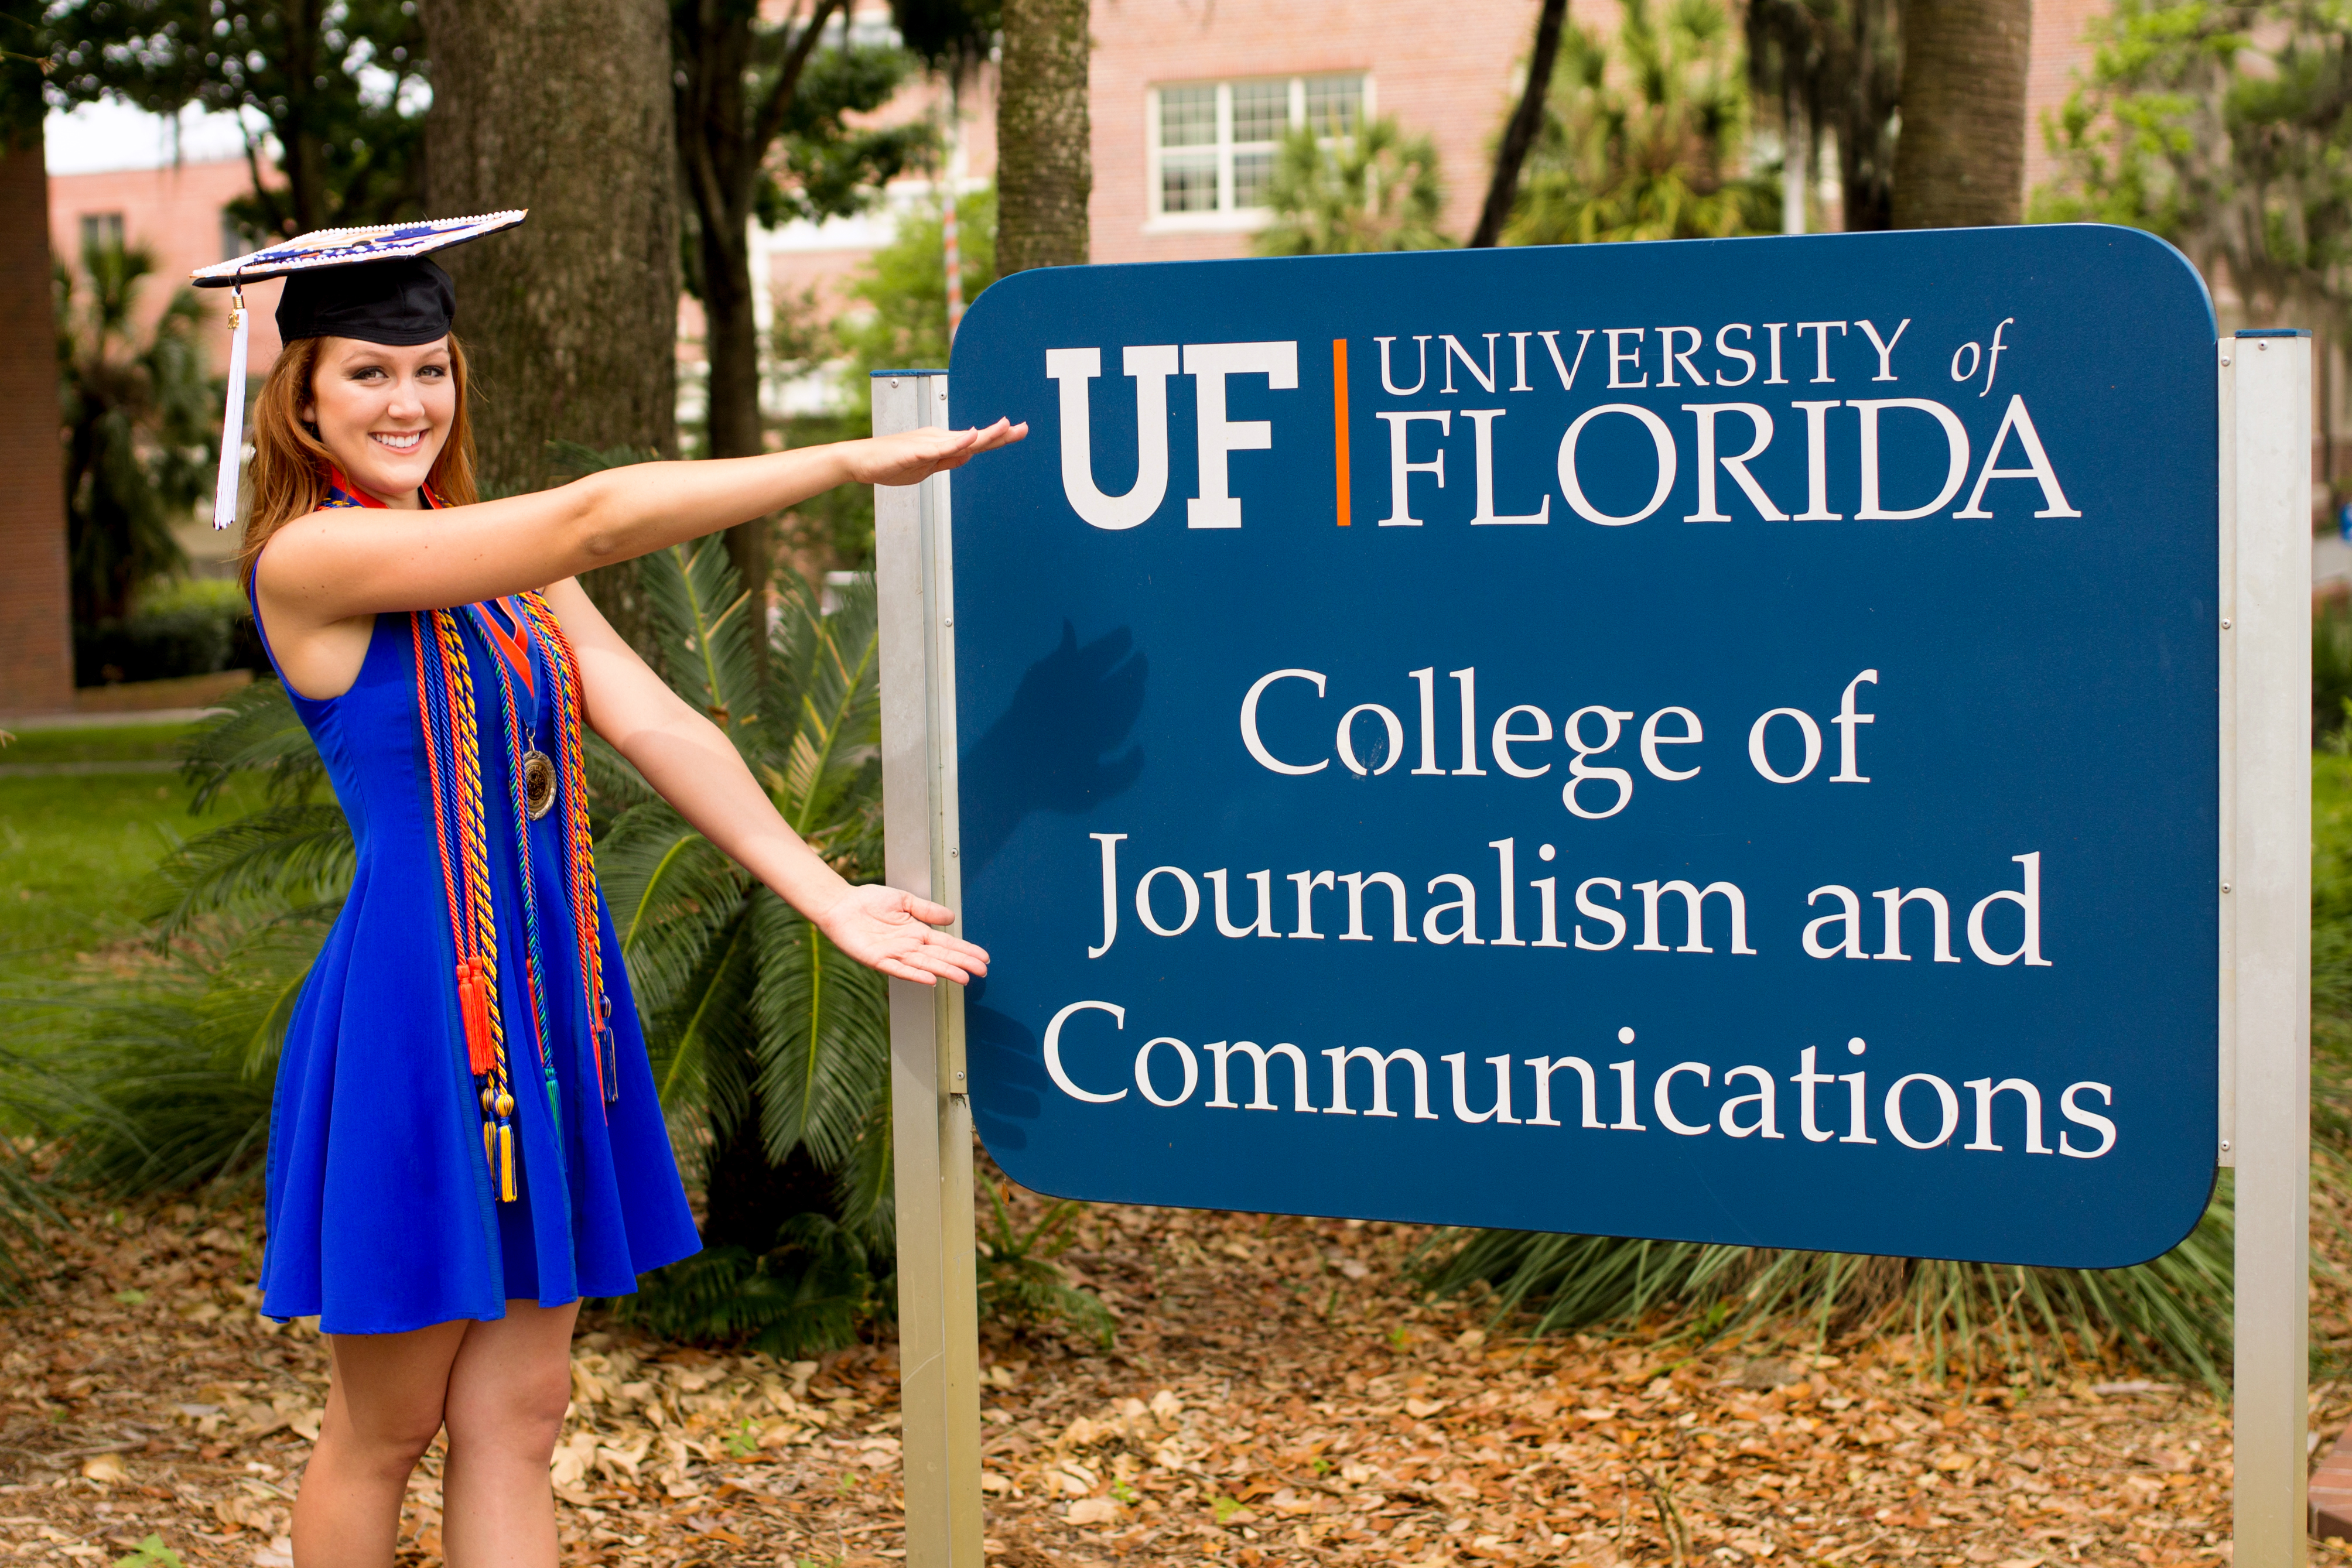 Tori Petry graduated Summa Cum Laude from the University of Florida